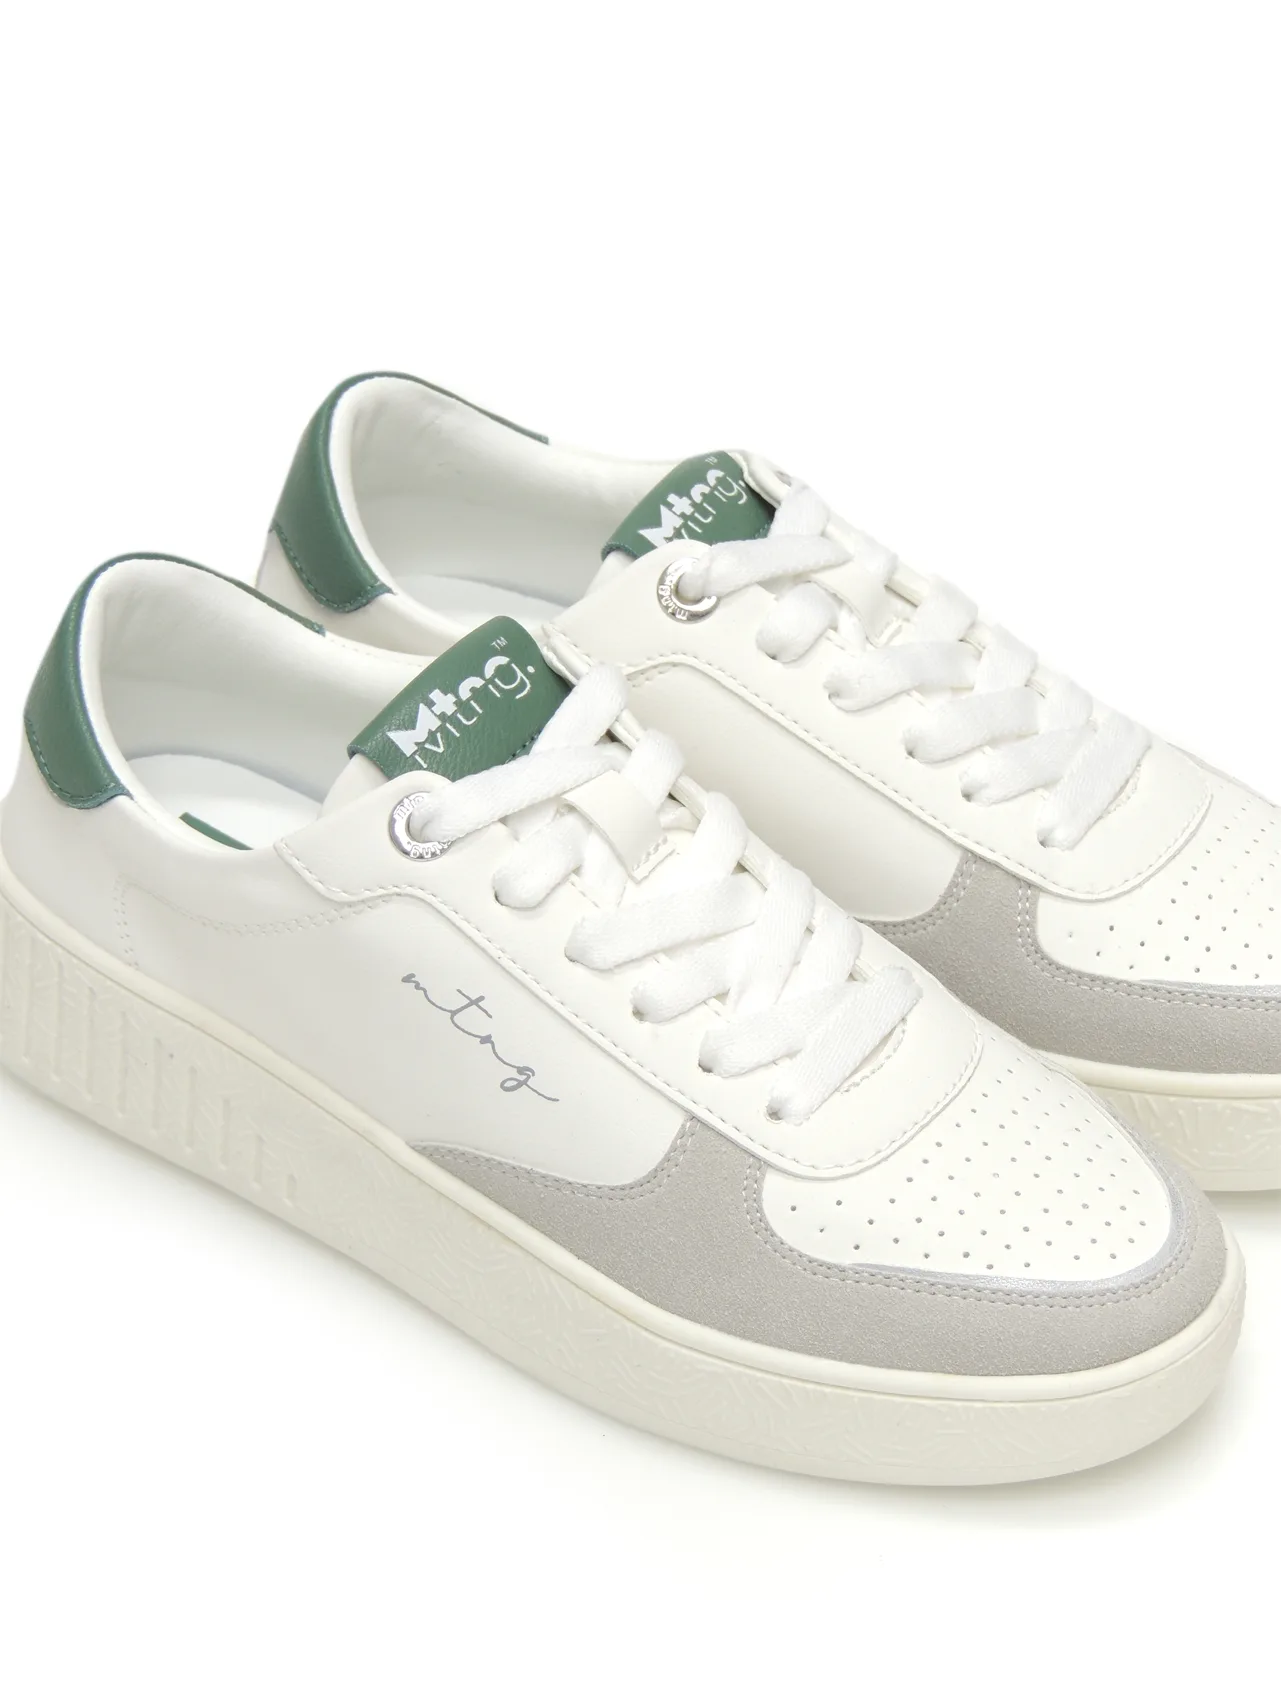 sneakers--mustang-60352-polipiel-blanco